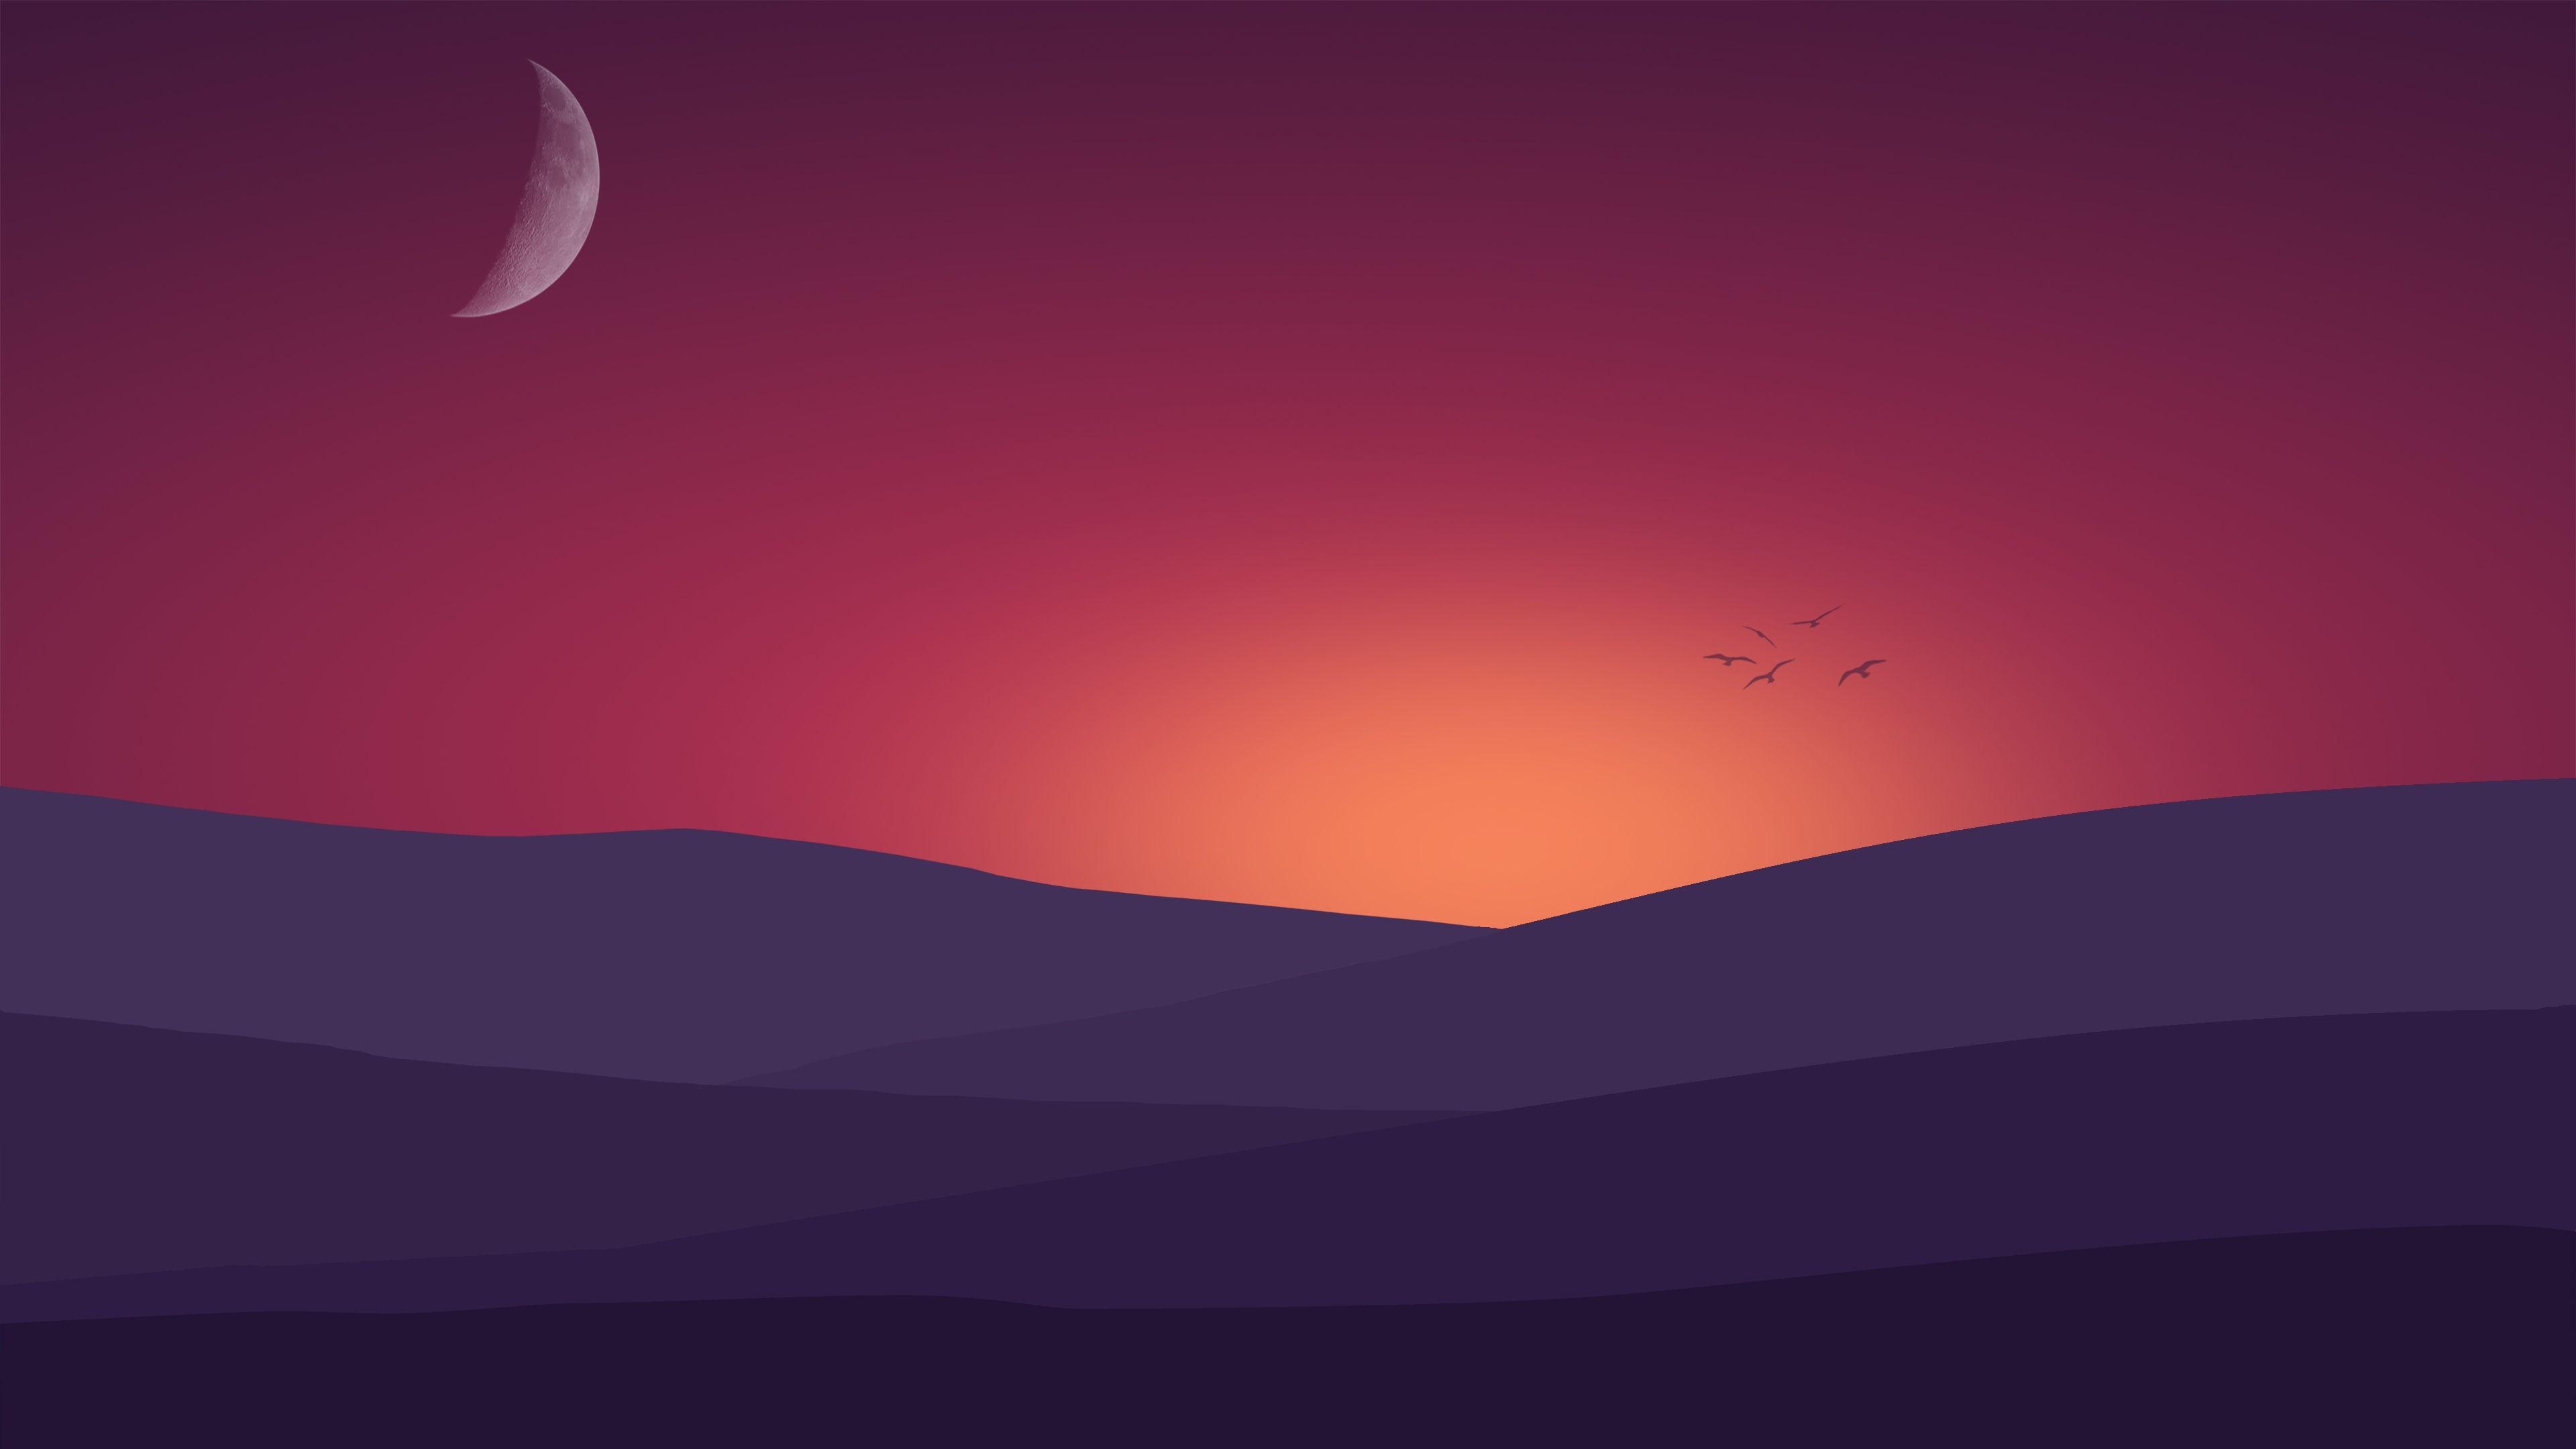 Birds Flying Towards Sunset Landscape Minimalist 4k, HD Artist, 4k Wallpaper, Image, Background, Photo and Picture